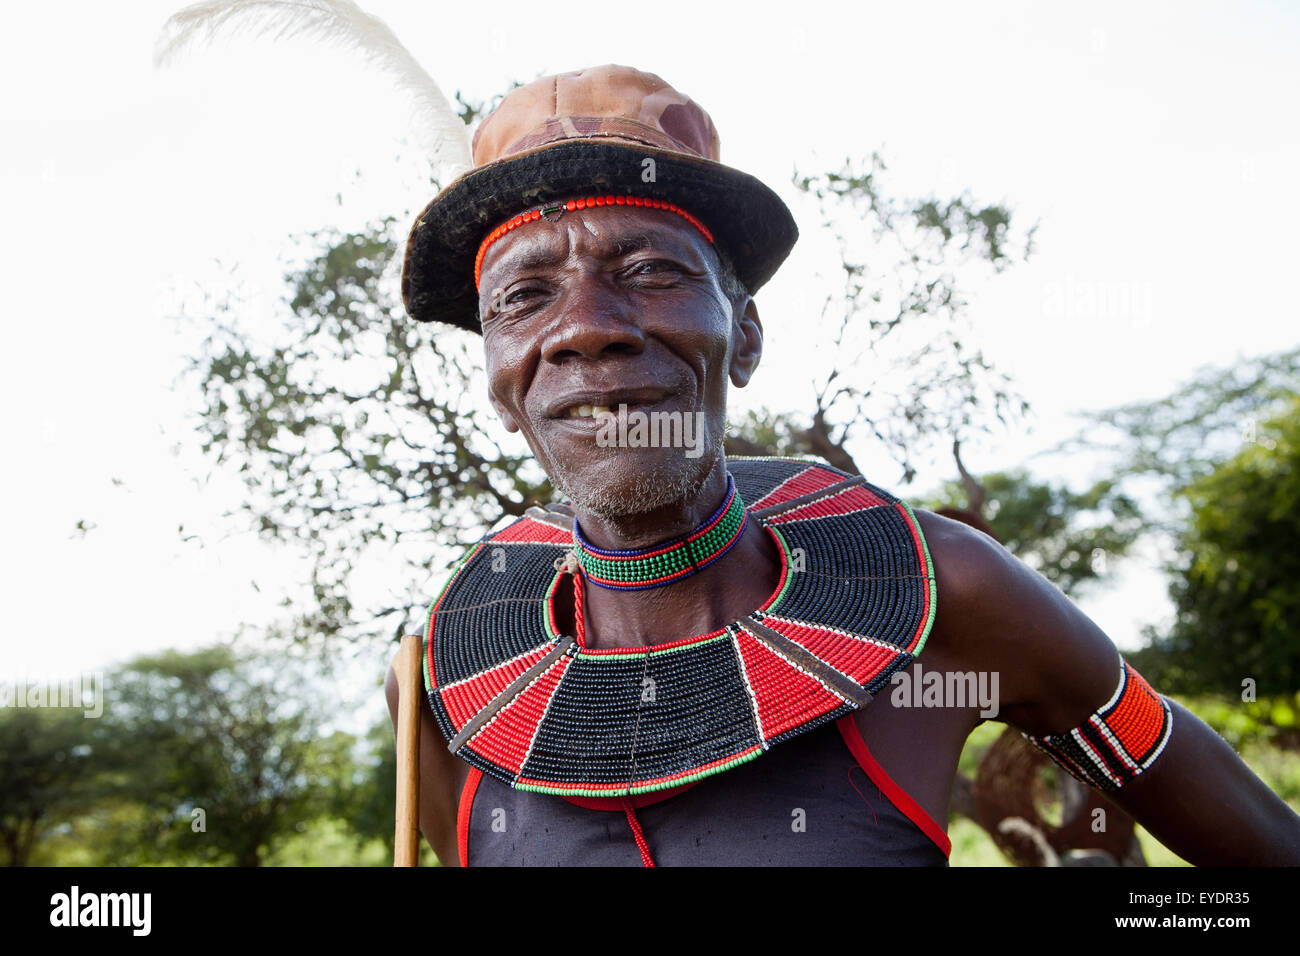 Kenya, Lake Baringo; Rift Valley, Portrait of traditionally dressed man from Pokot tribe Stock Photo